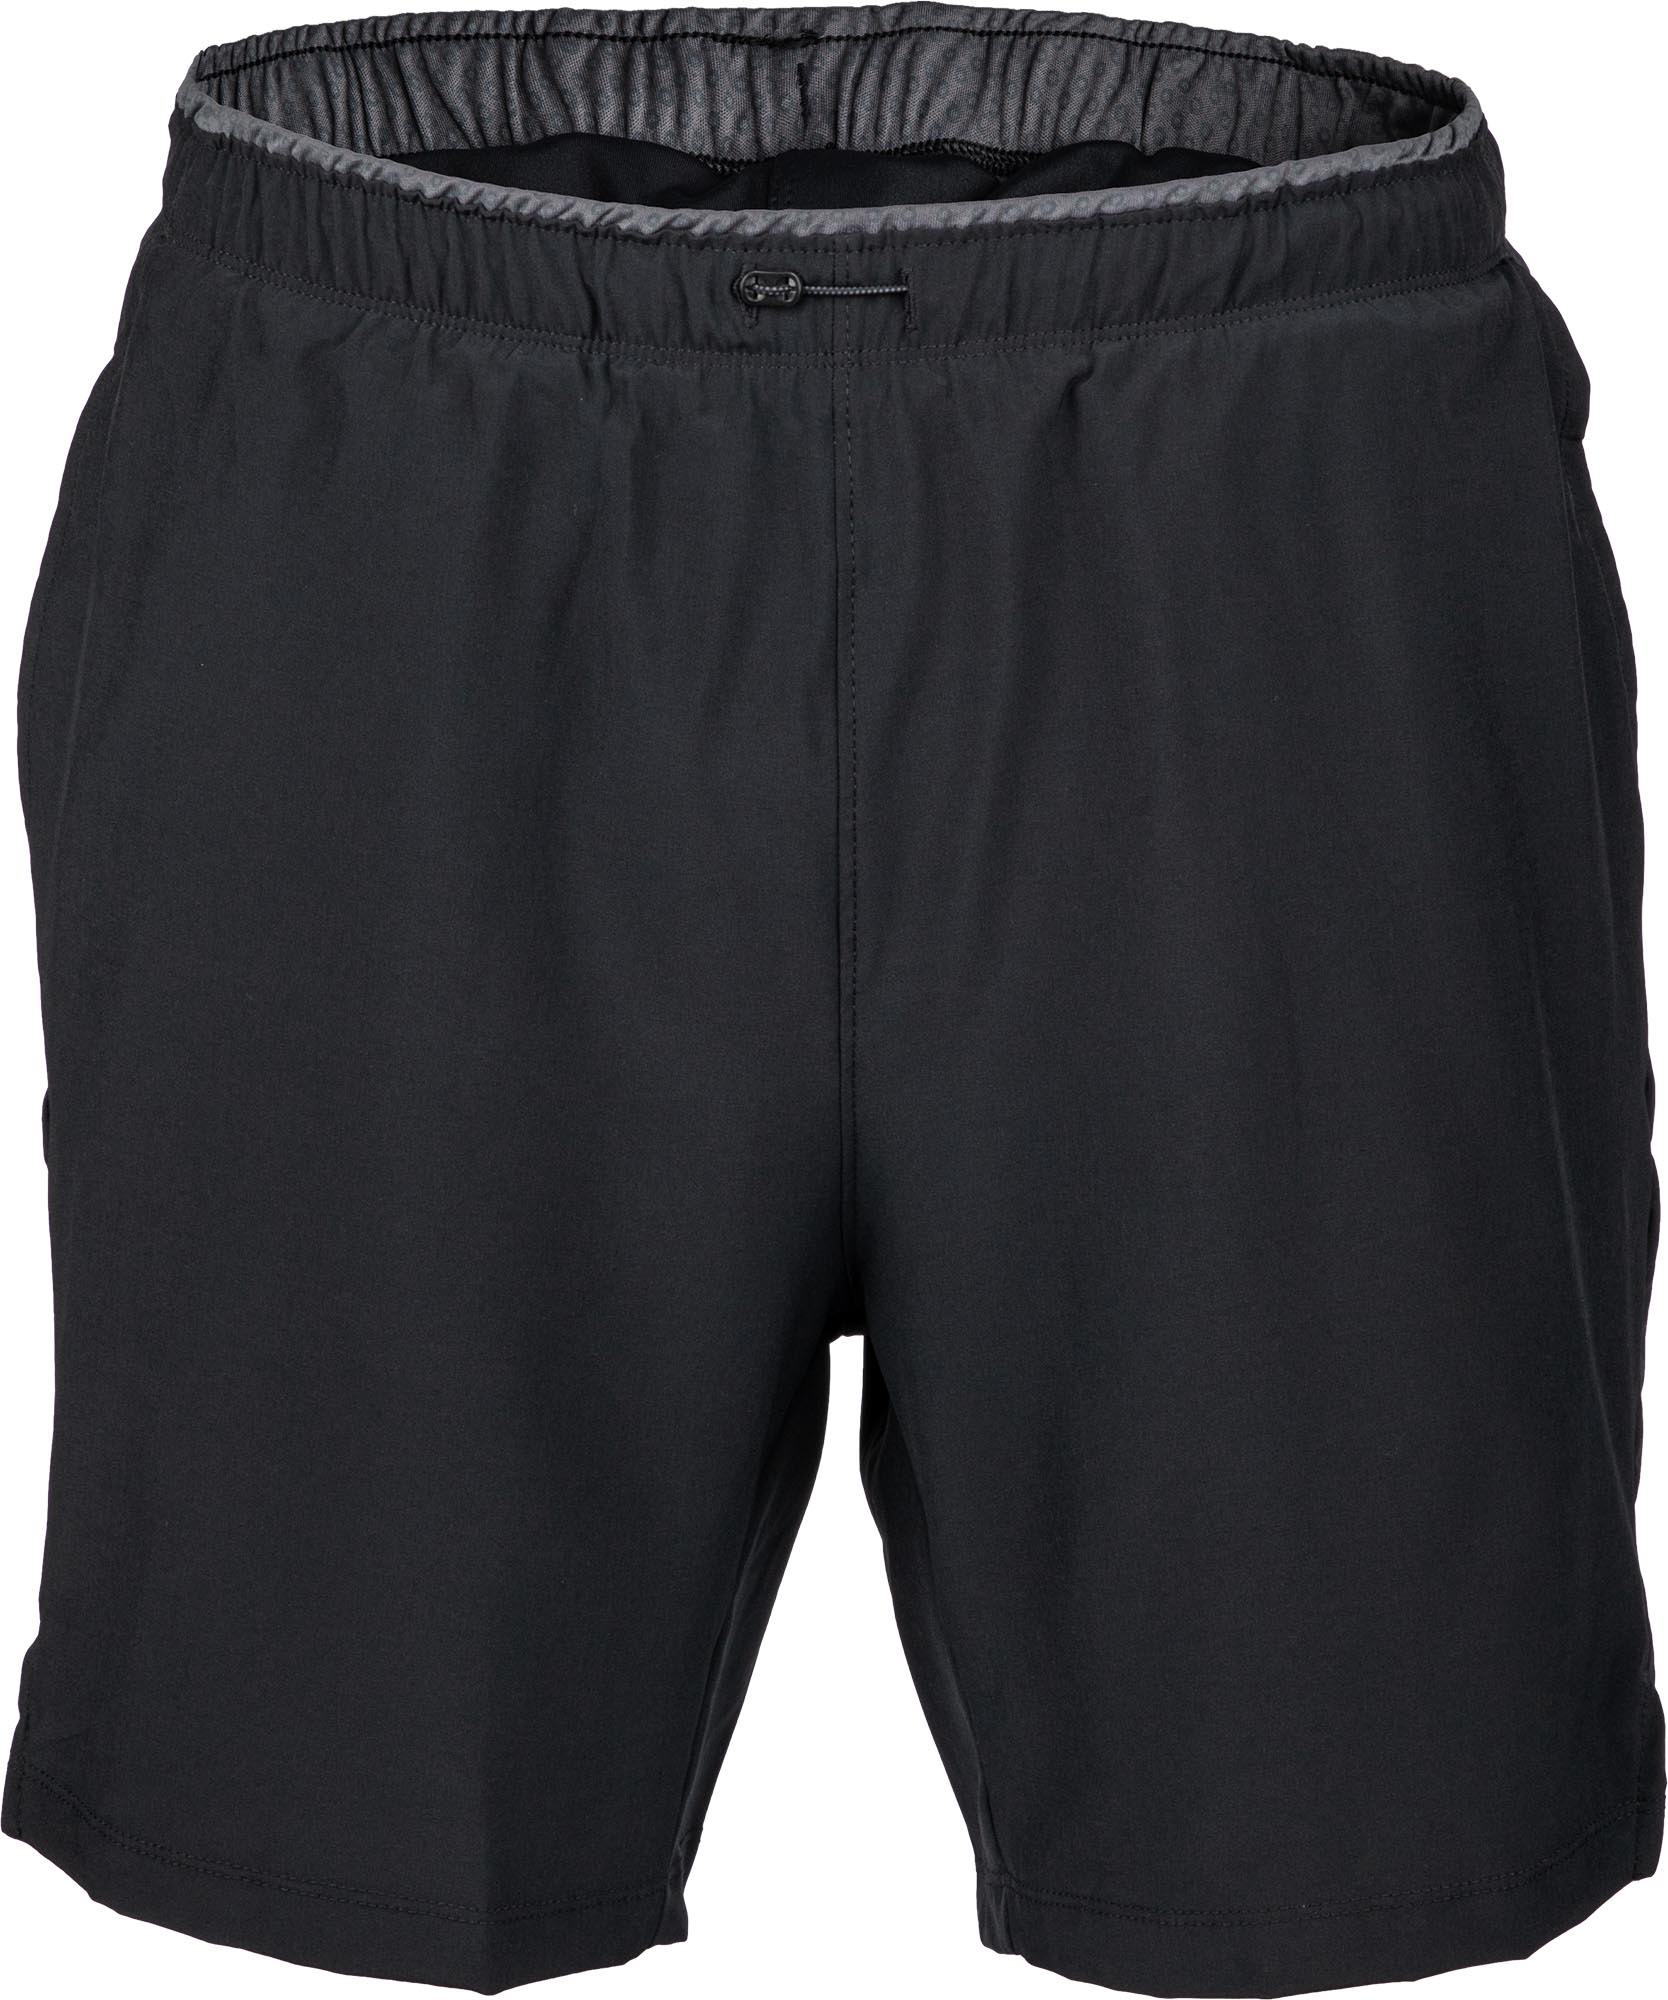 Men's functional shorts